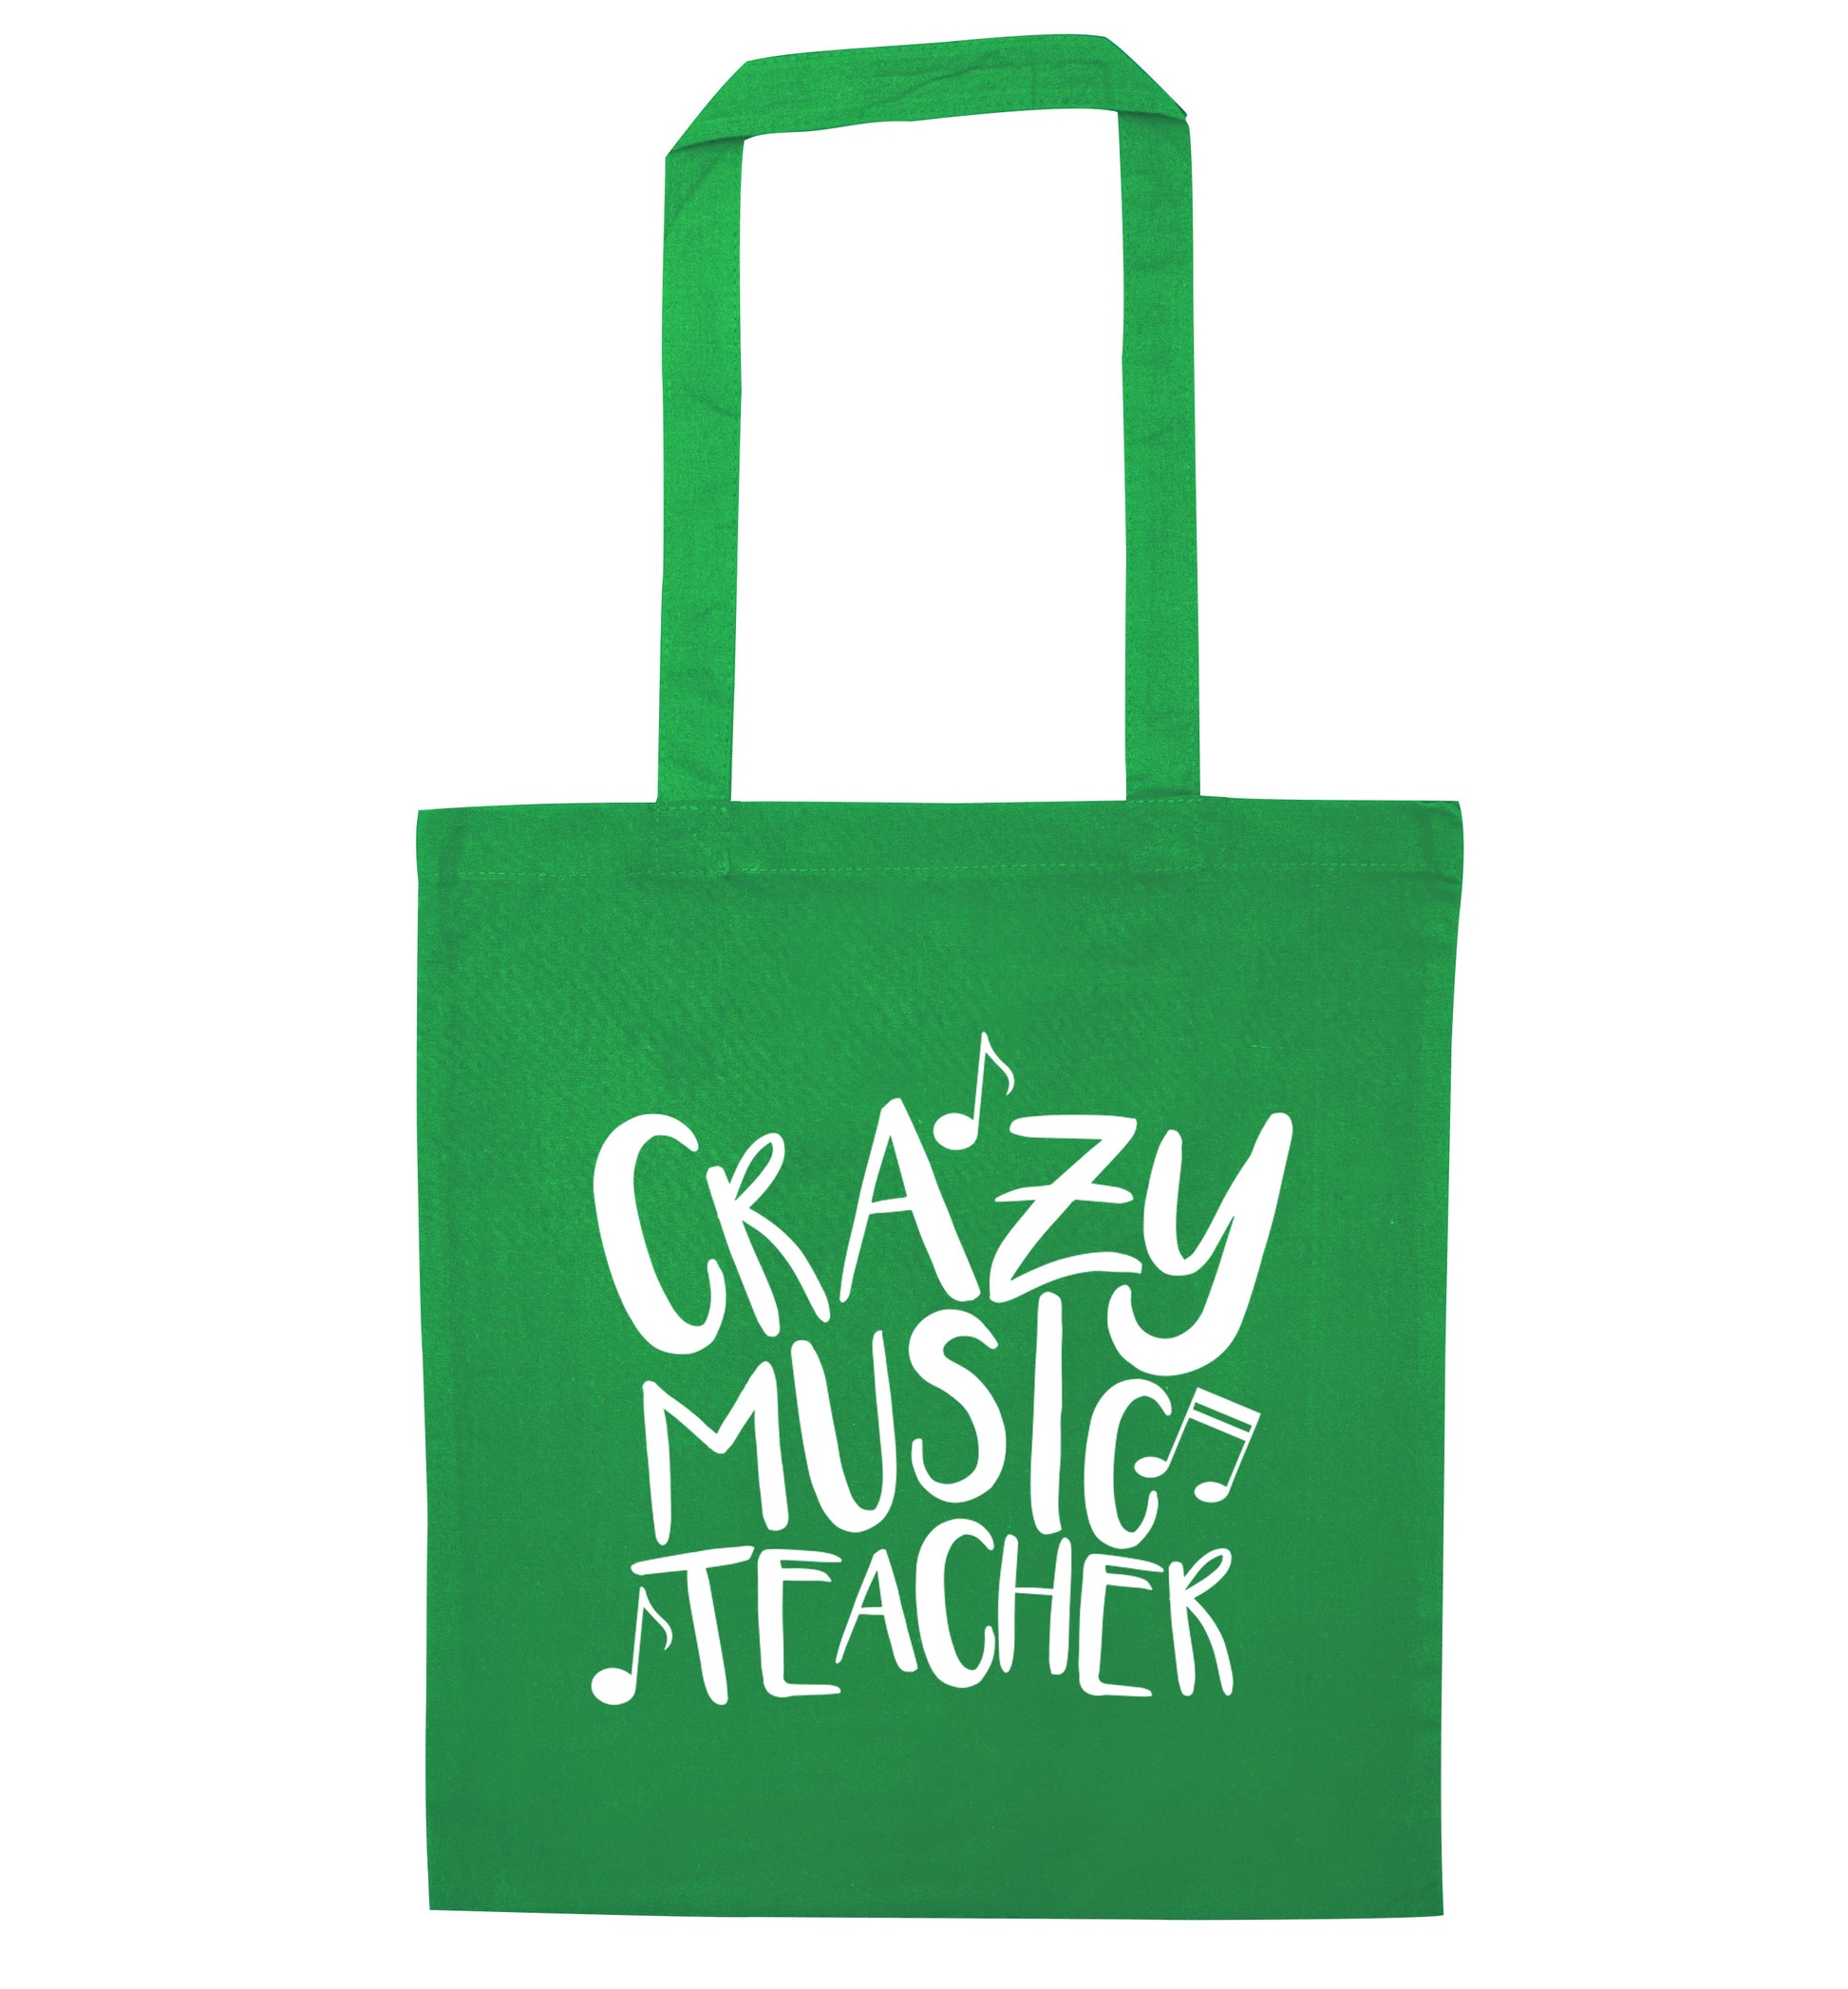 Crazy music teacher green tote bag